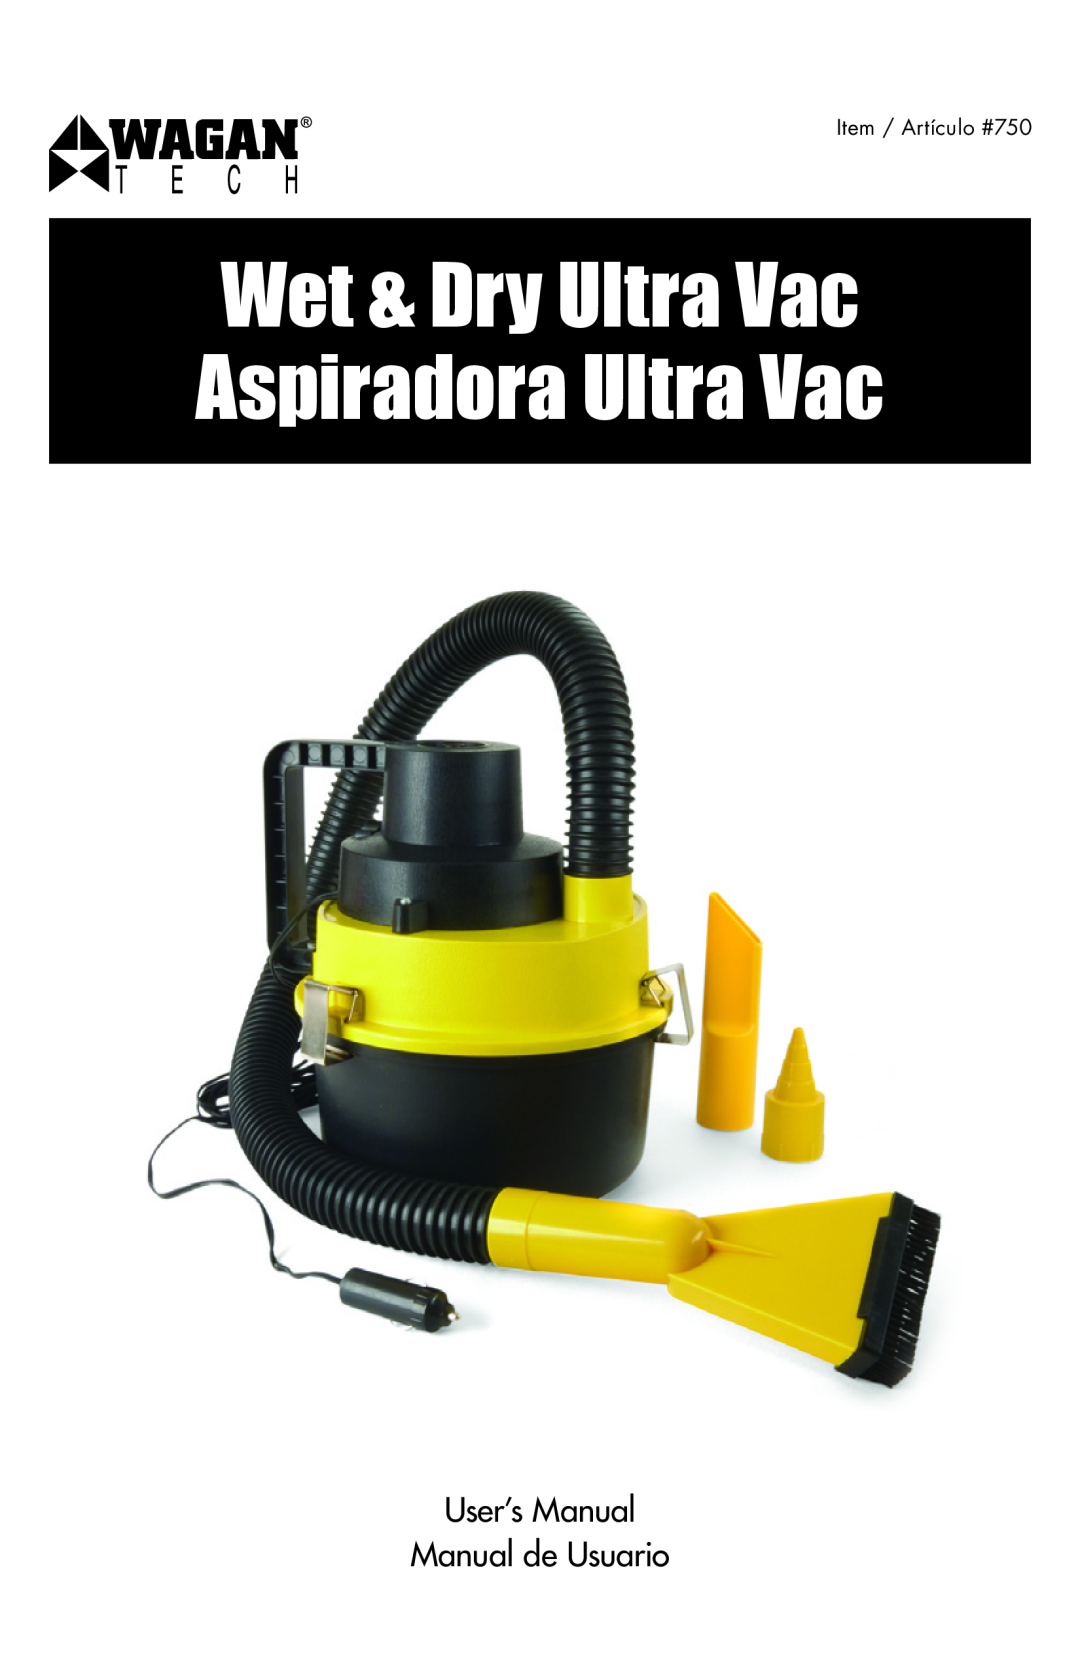 Wagan 750 user manual Wet & Dry Ultra Vac Aspiradora Ultra Vac 